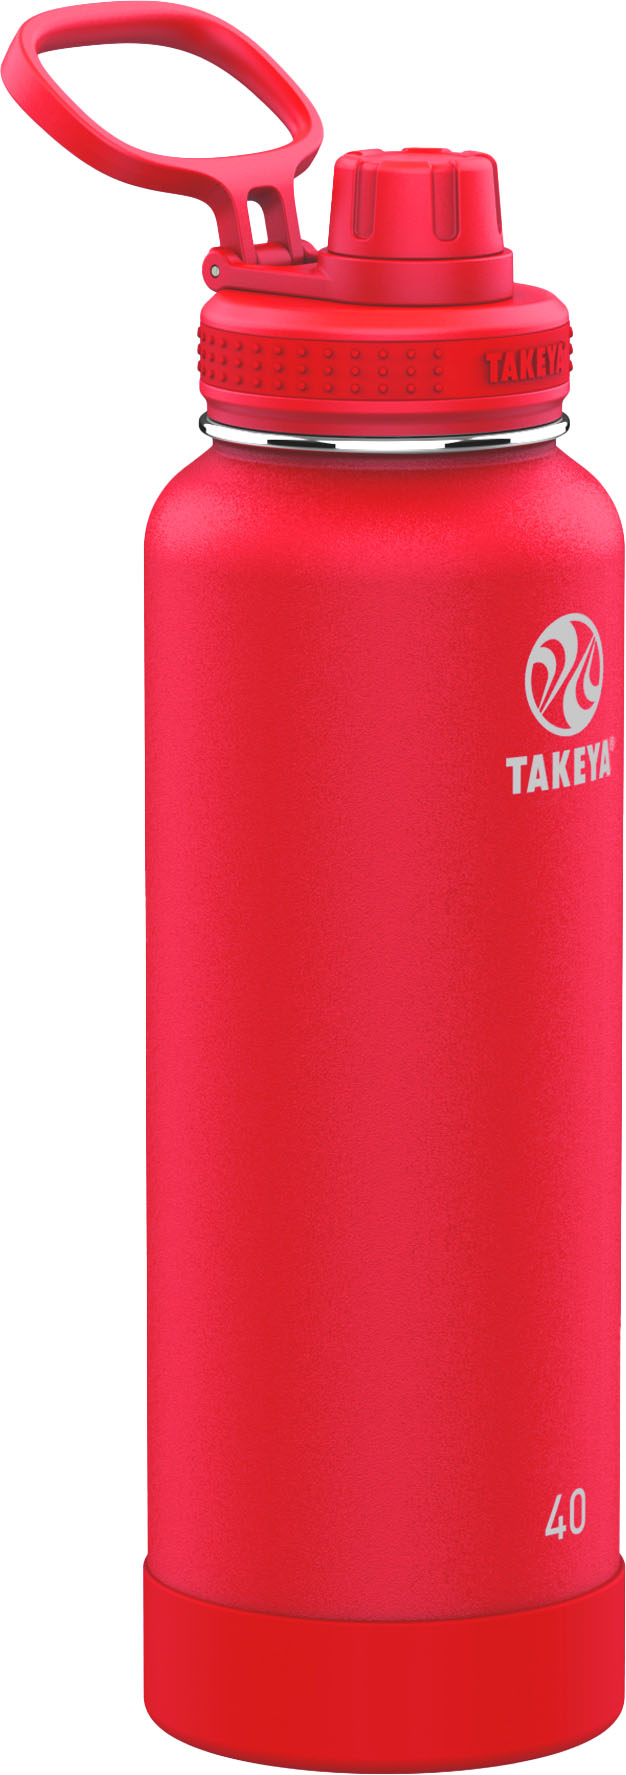 Takeya Actives 40 oz. Stainless Steel Sport Bottle Watermelon